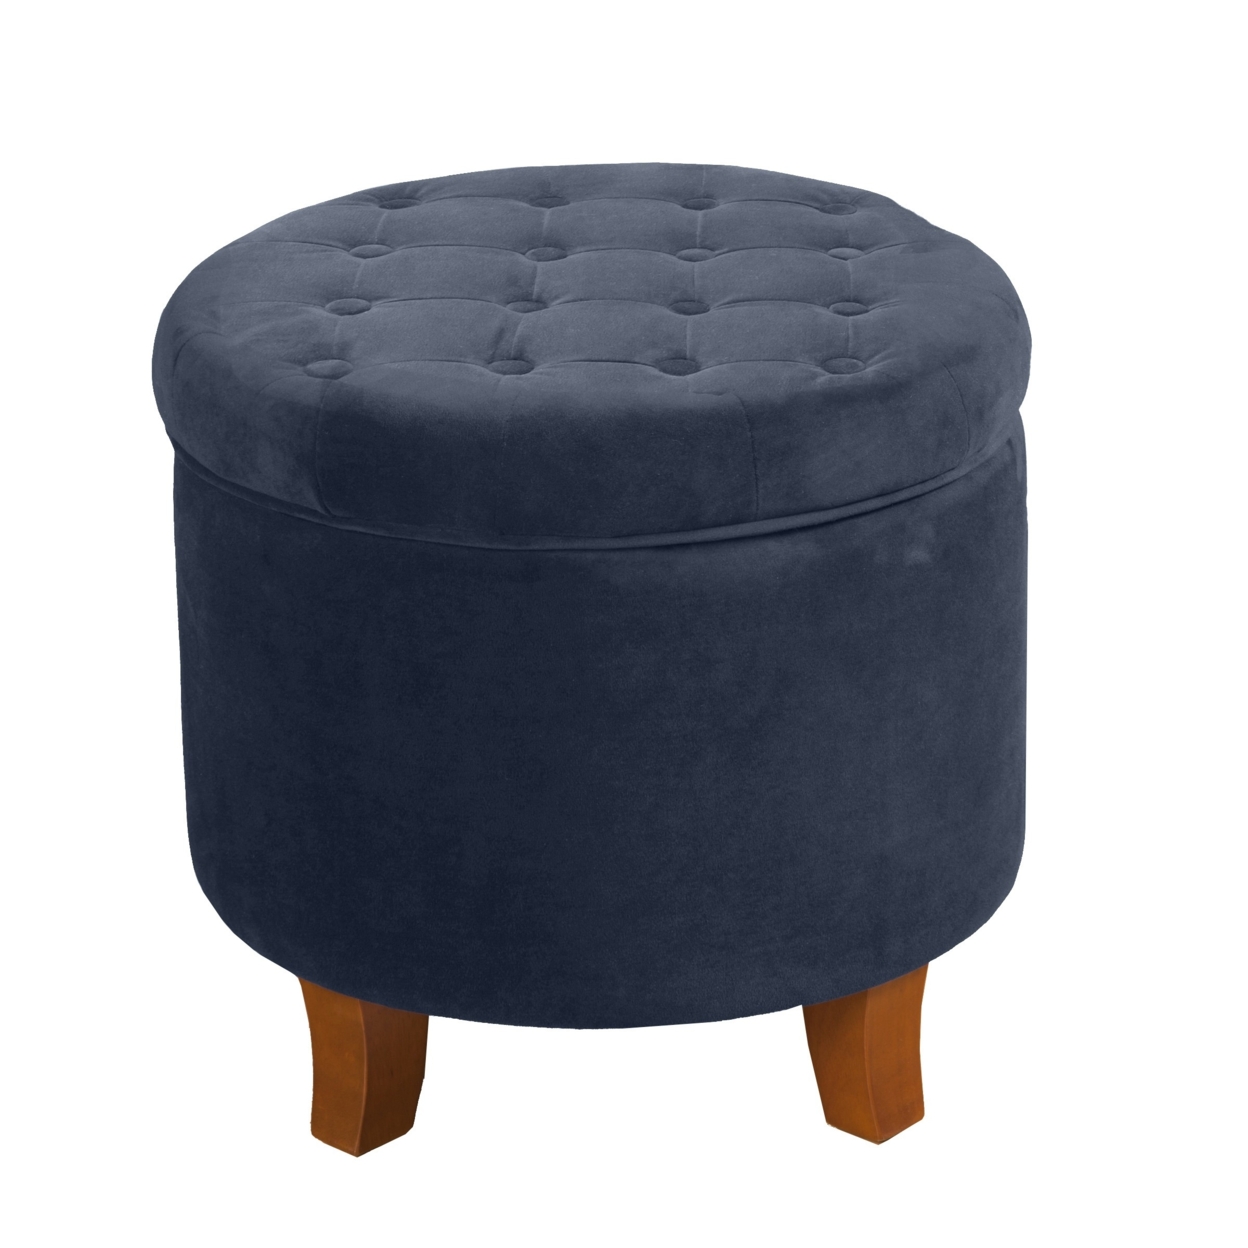 Button Tufted Velvet Upholstered Wooden Ottoman With Hidden Storage, Dark Blue And Brown- Saltoro Sherpi